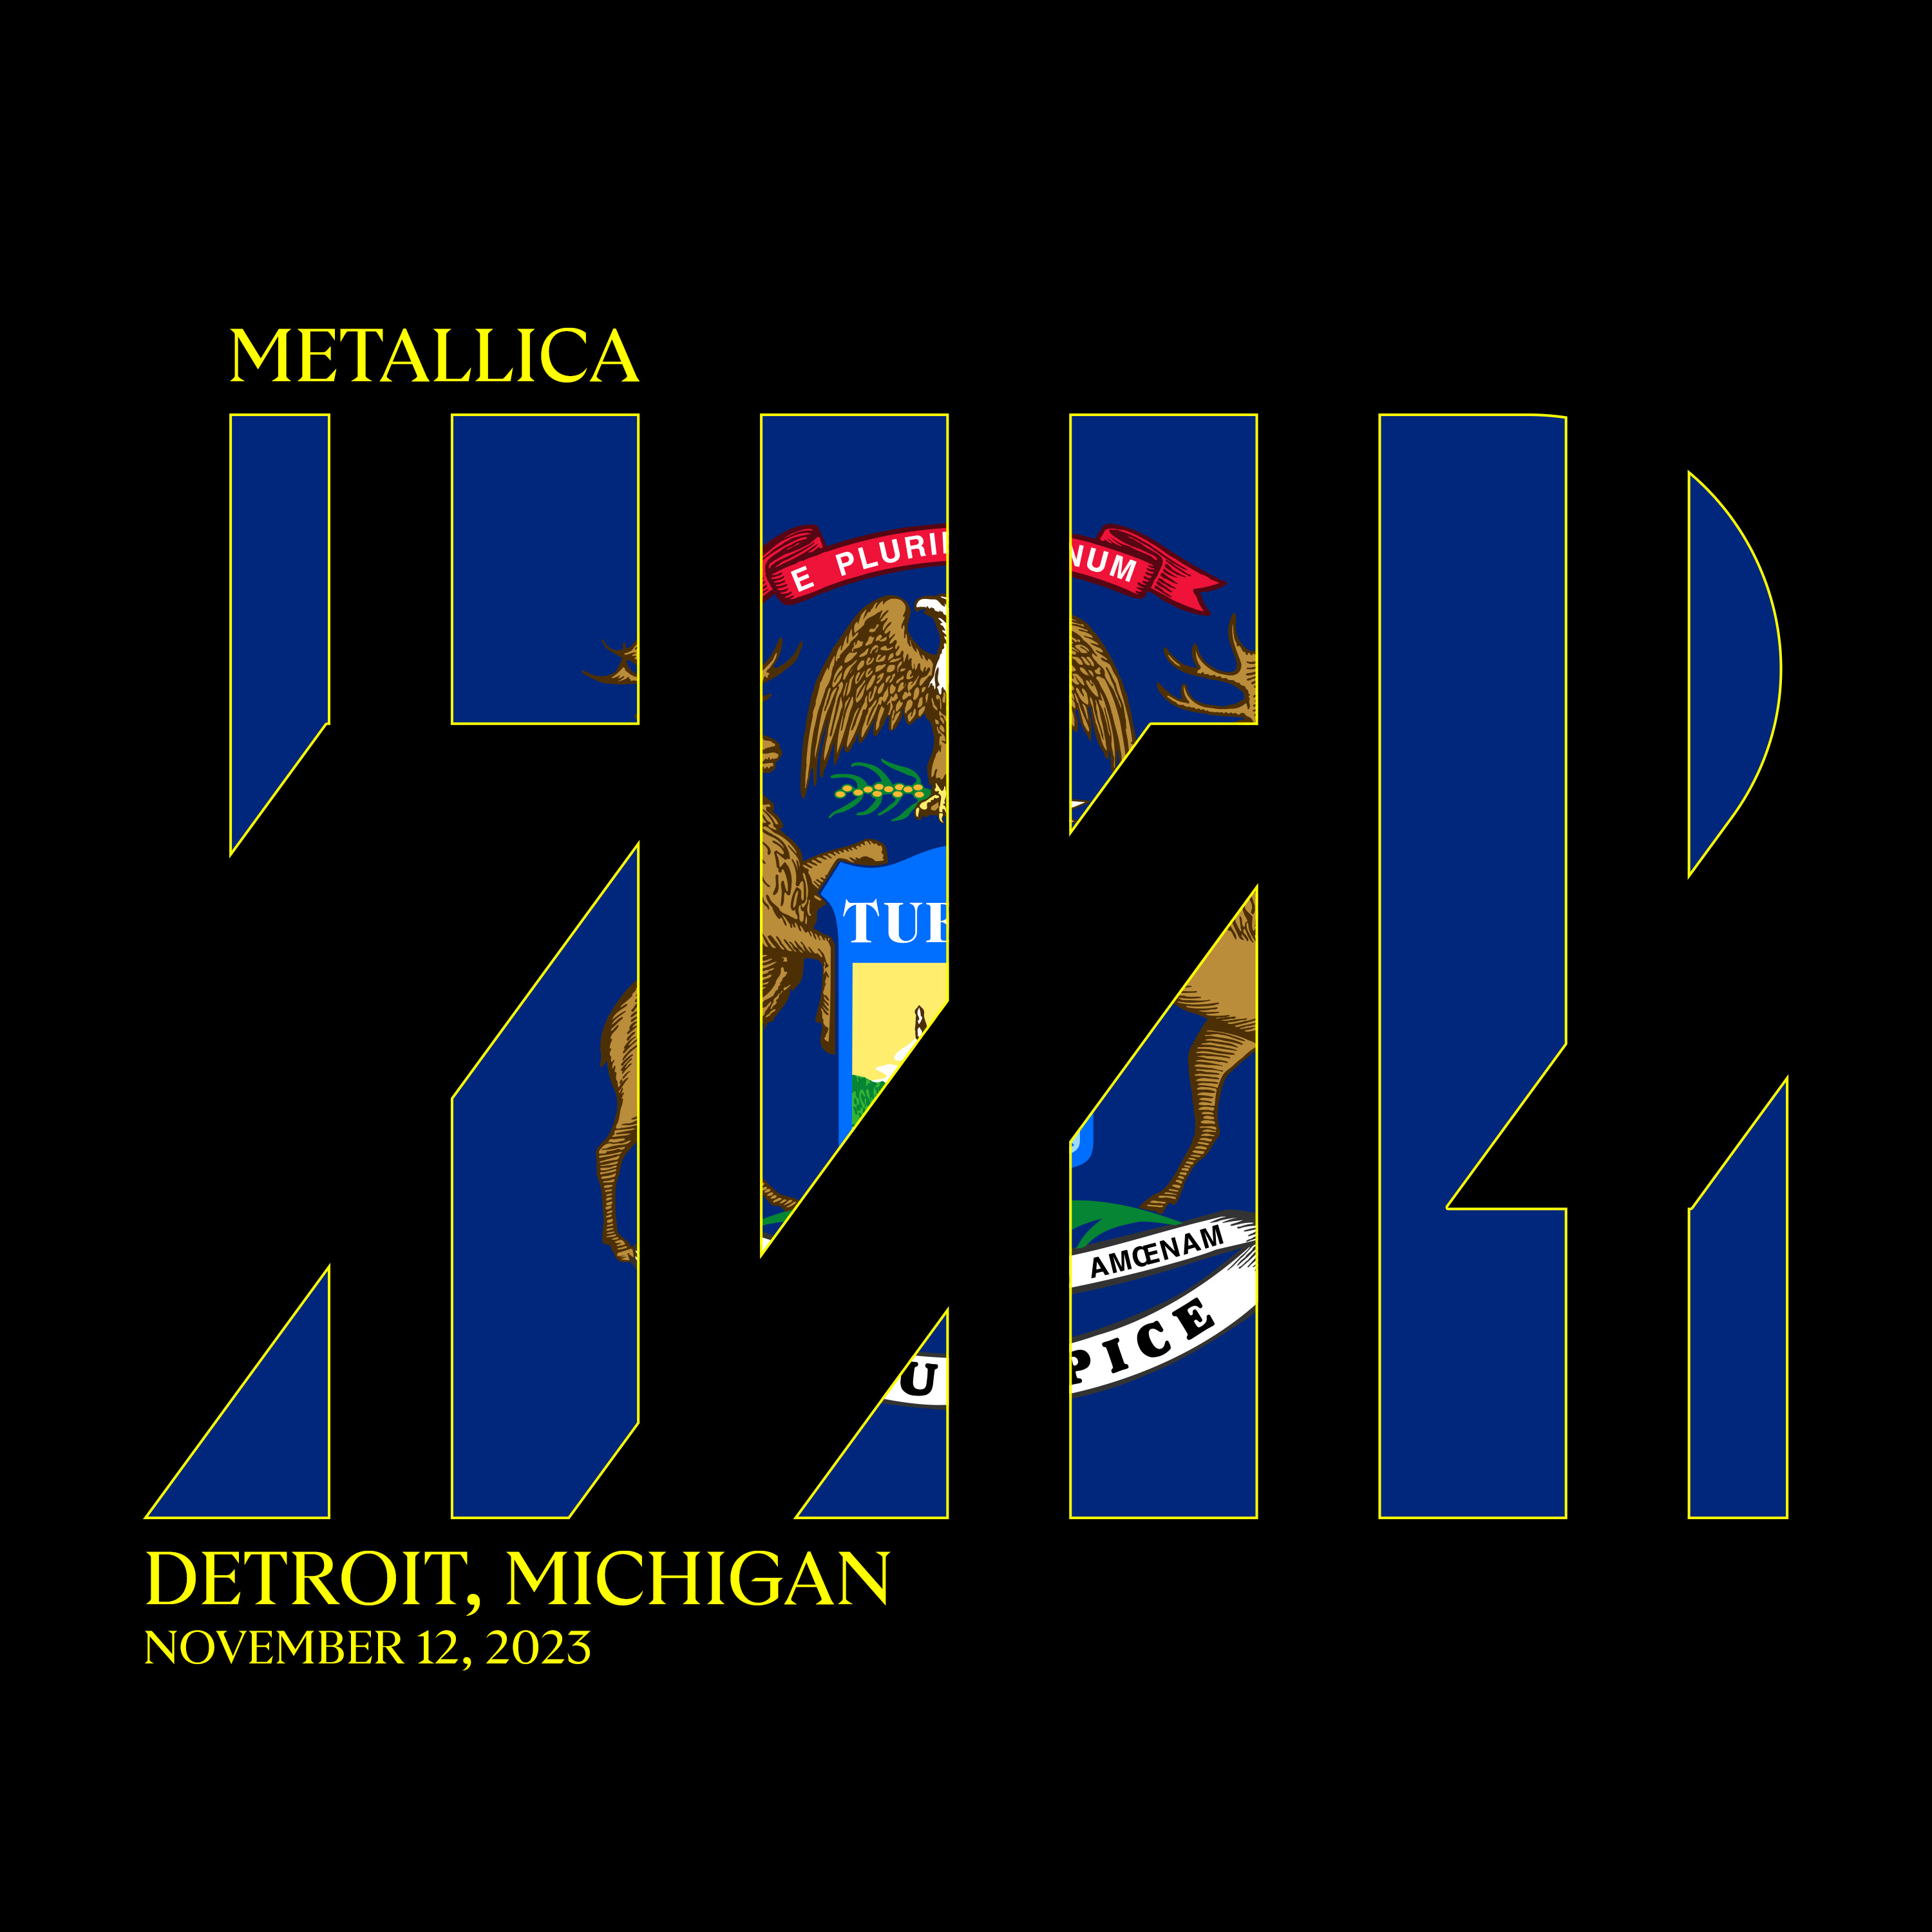 Metallica Live Concert Setlist at Ford Field, Detroit, MI on 11122023